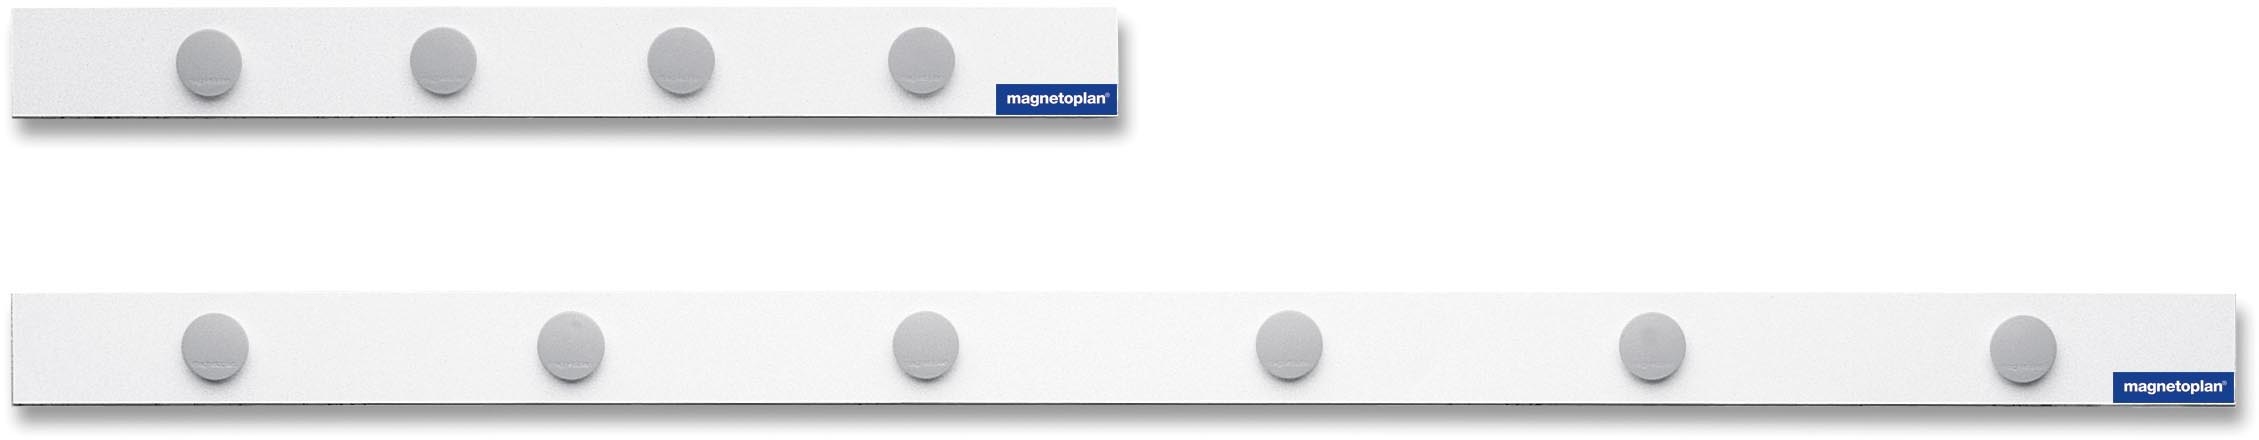 MAGNETOPLAN Set Rail mural magnét. 500mm 16270M a. 4 Aimants support